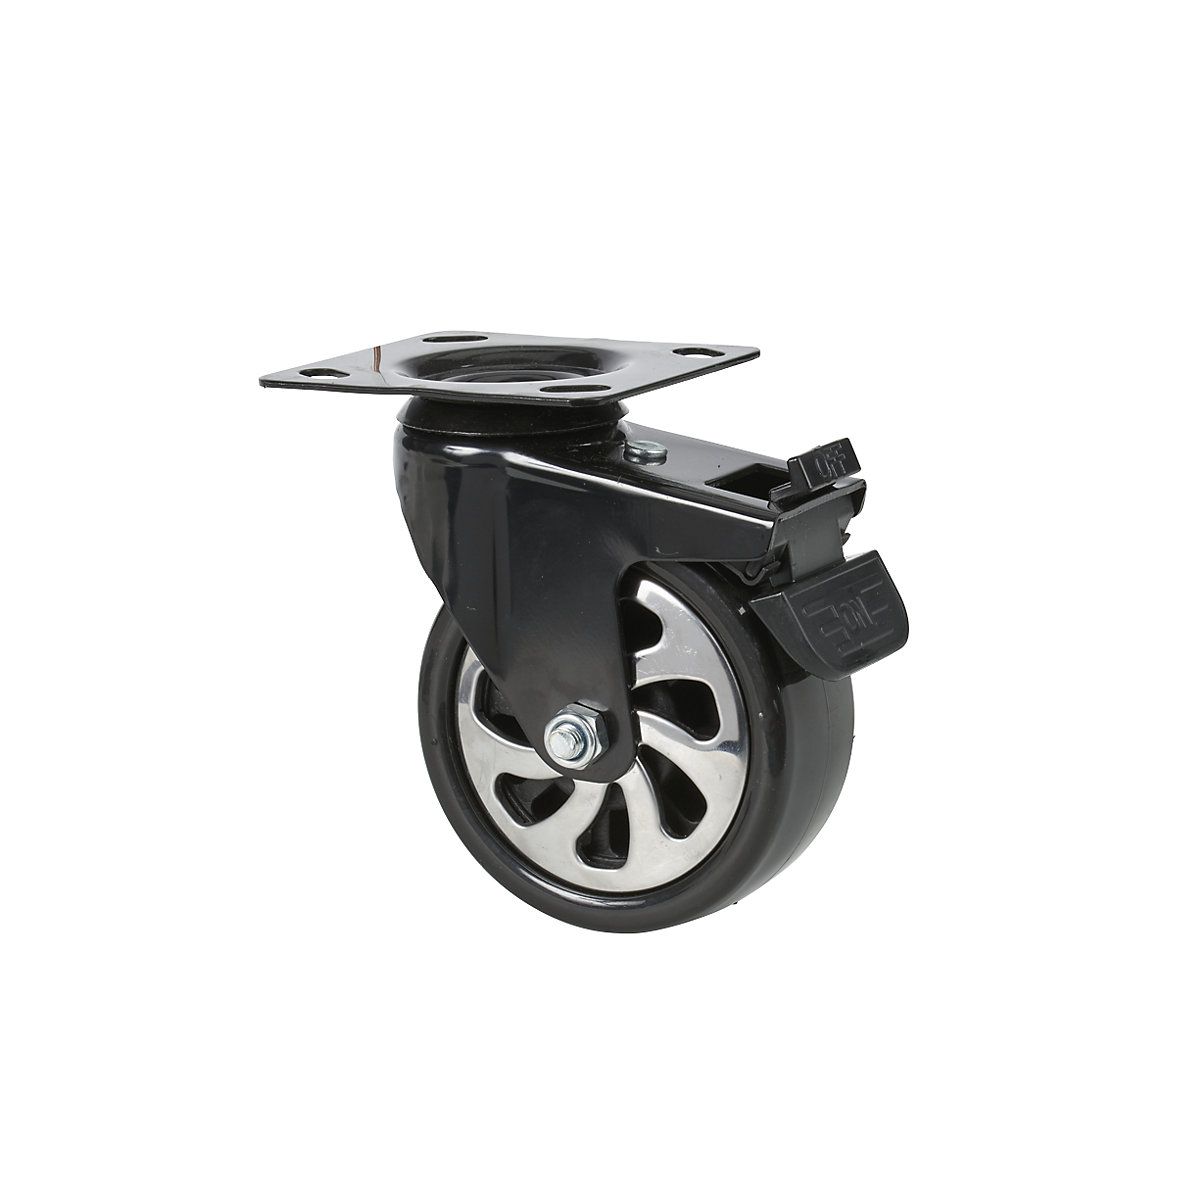 Swivel castor with wheel stop